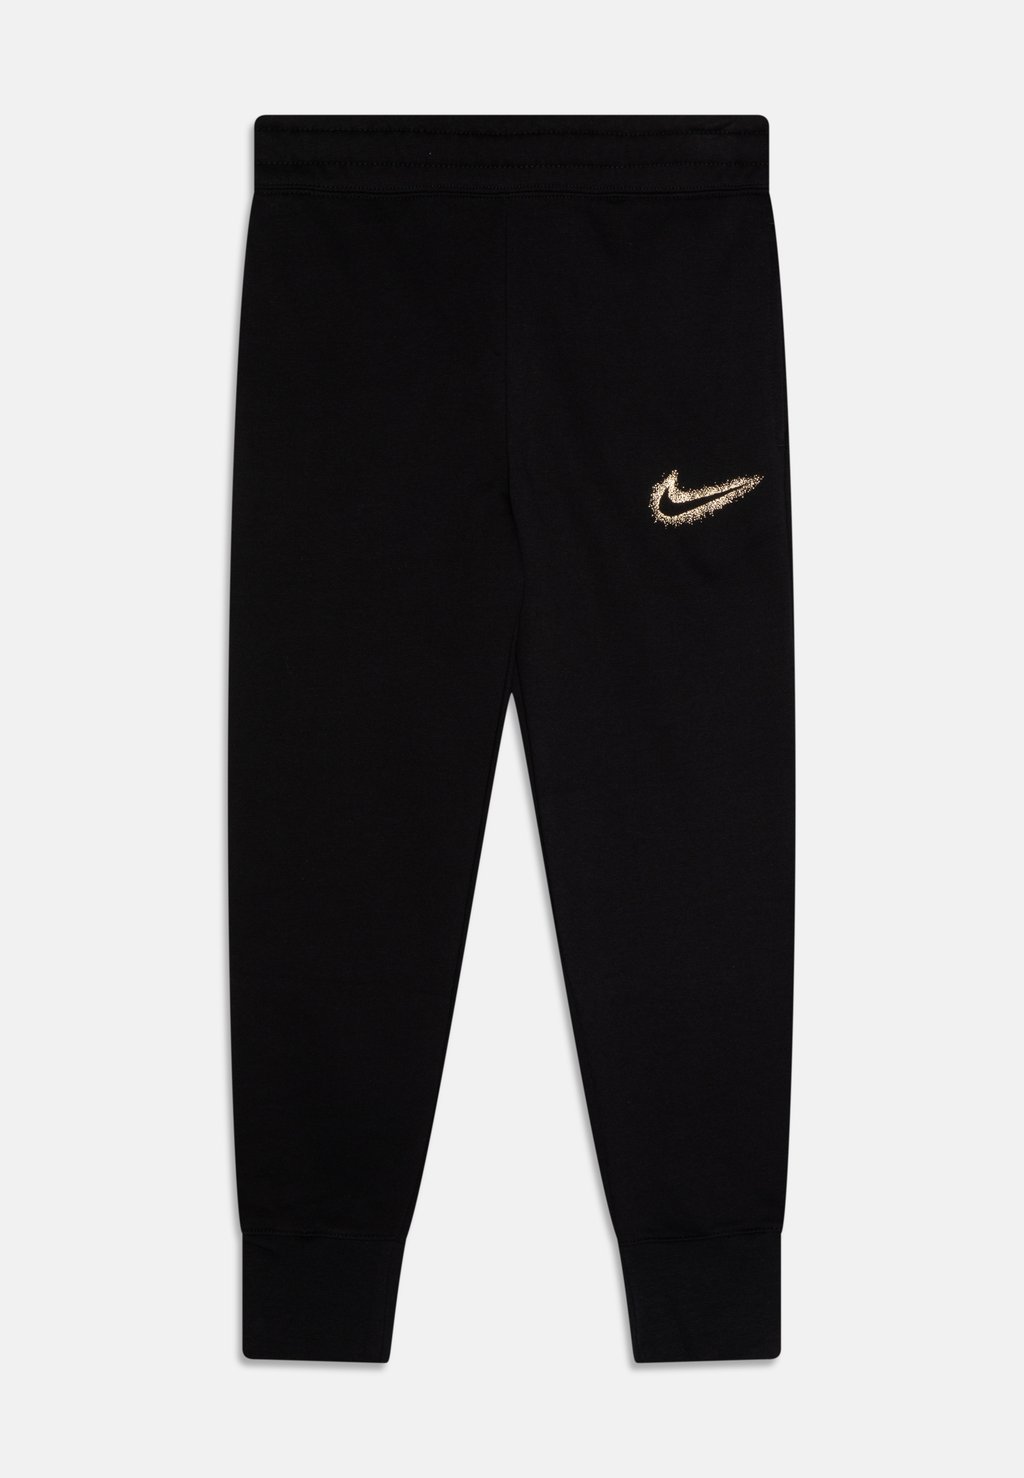 Спортивные штаны NSW FLC PANT Nike Sportswear, черный